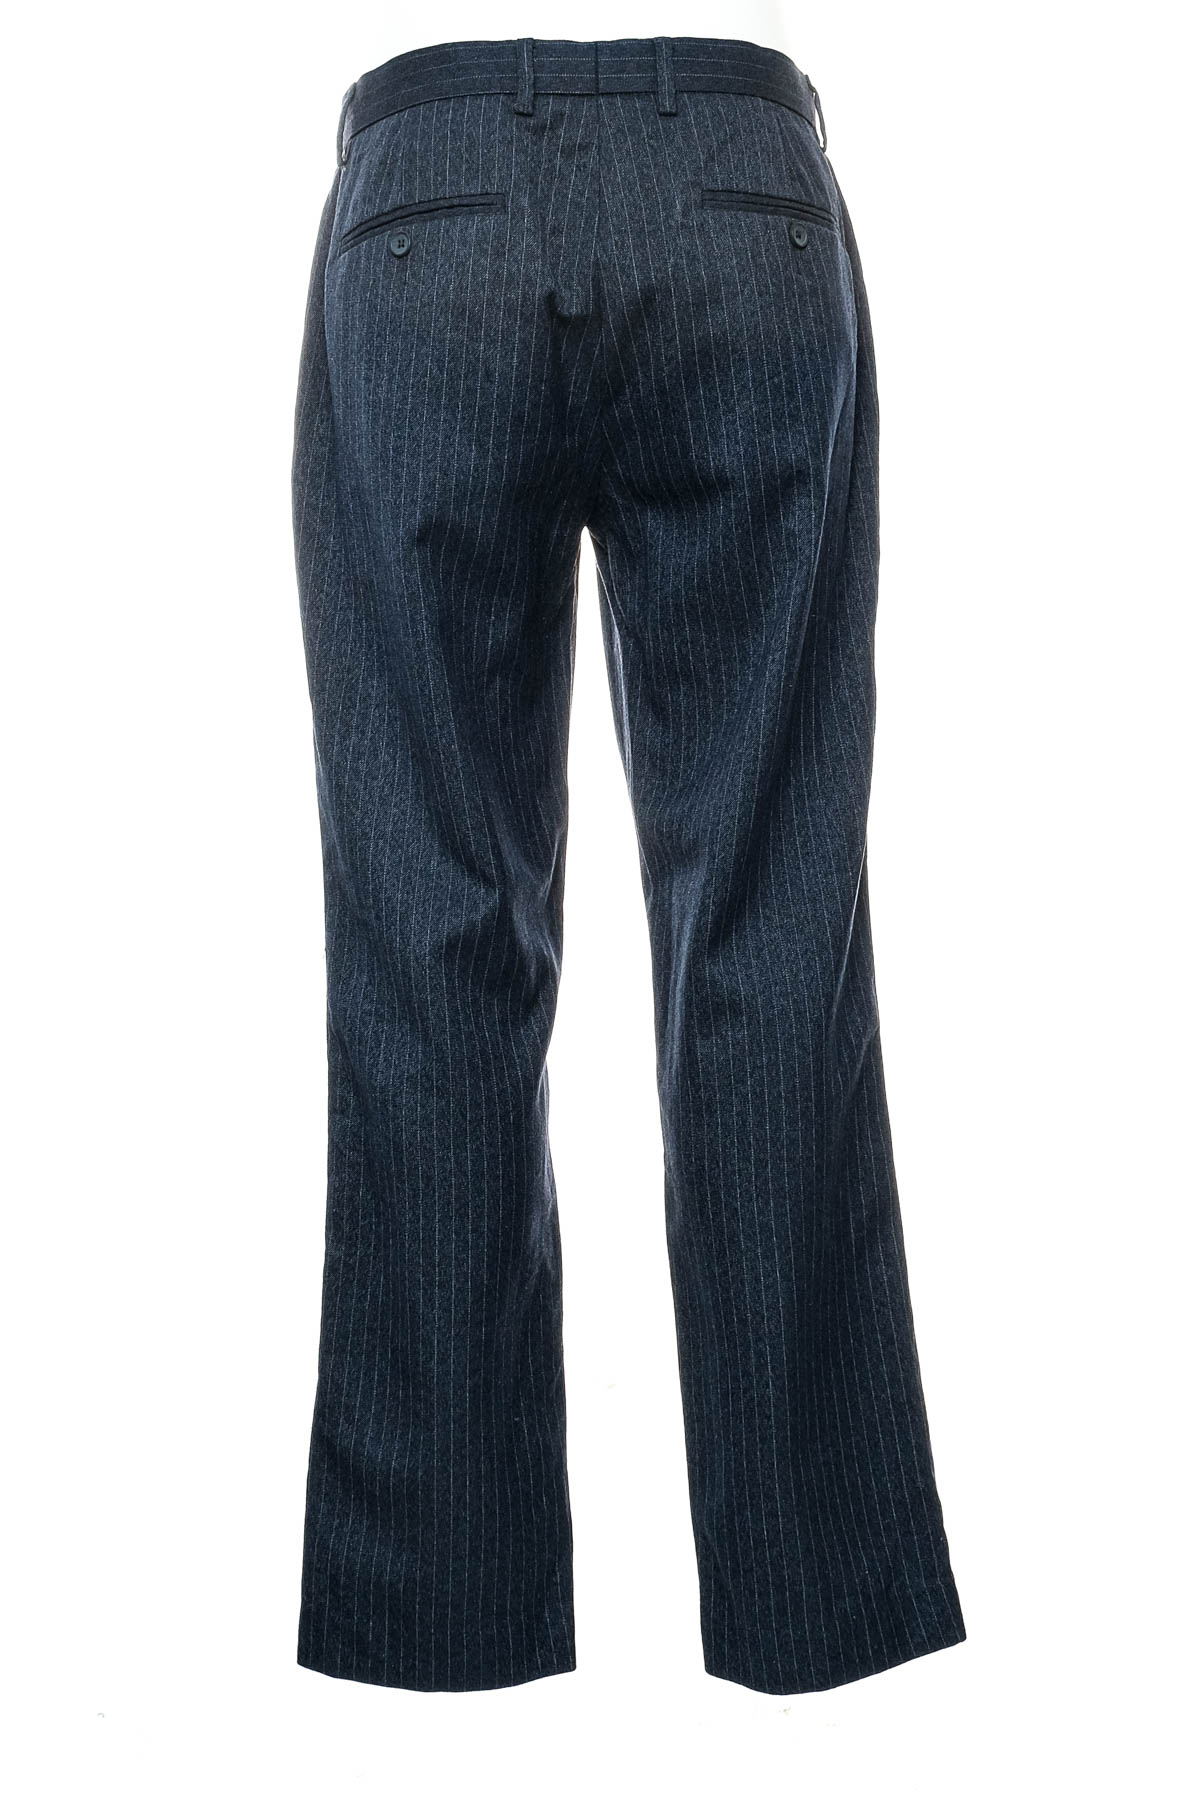 Pantalon pentru bărbați - Burton - 1